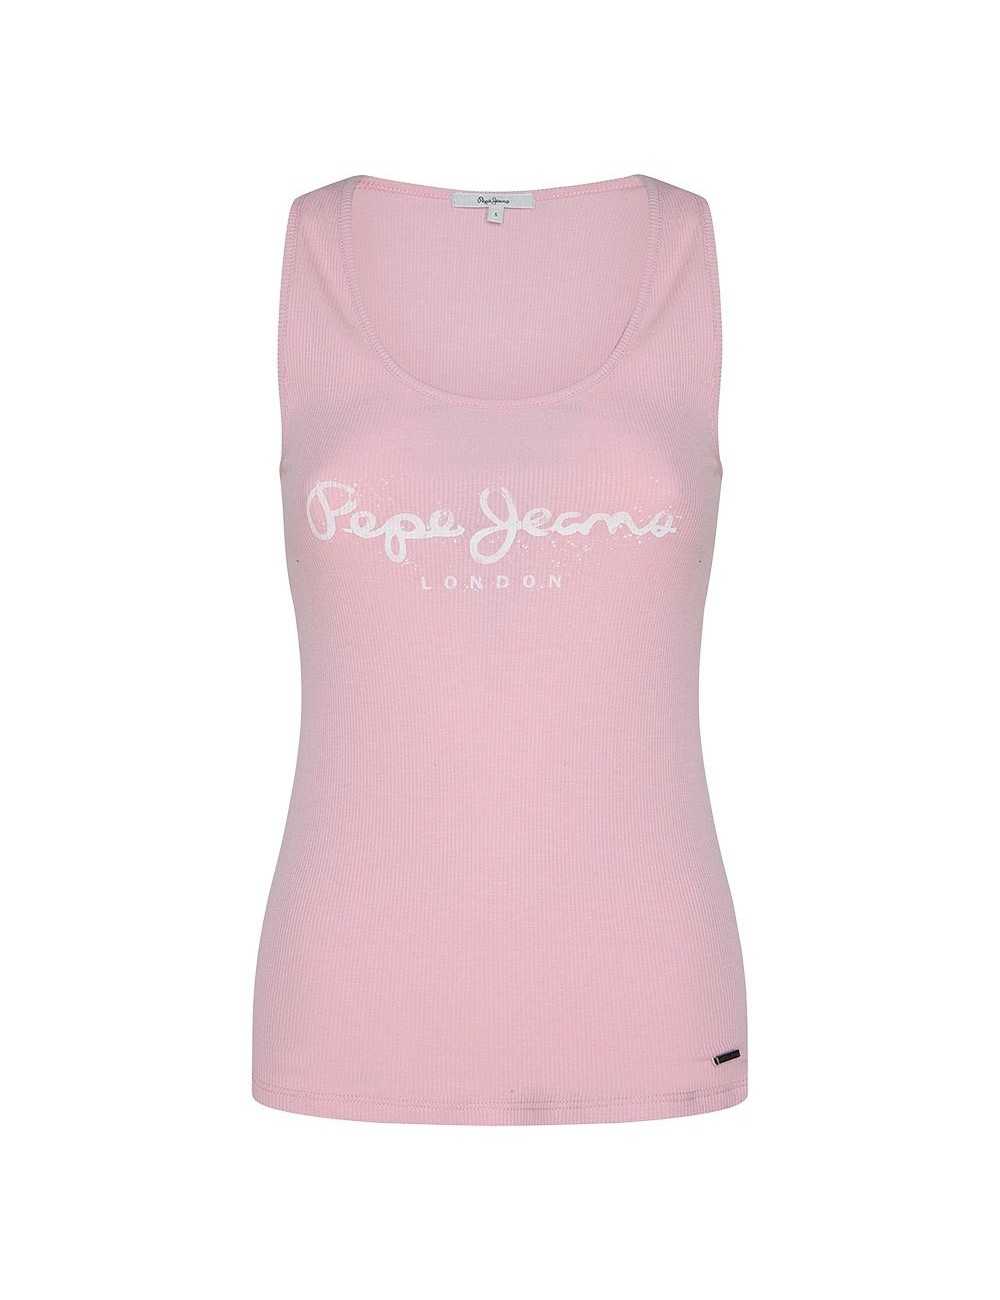 T-shirt Pepe Jeans donna senza manica pink logo